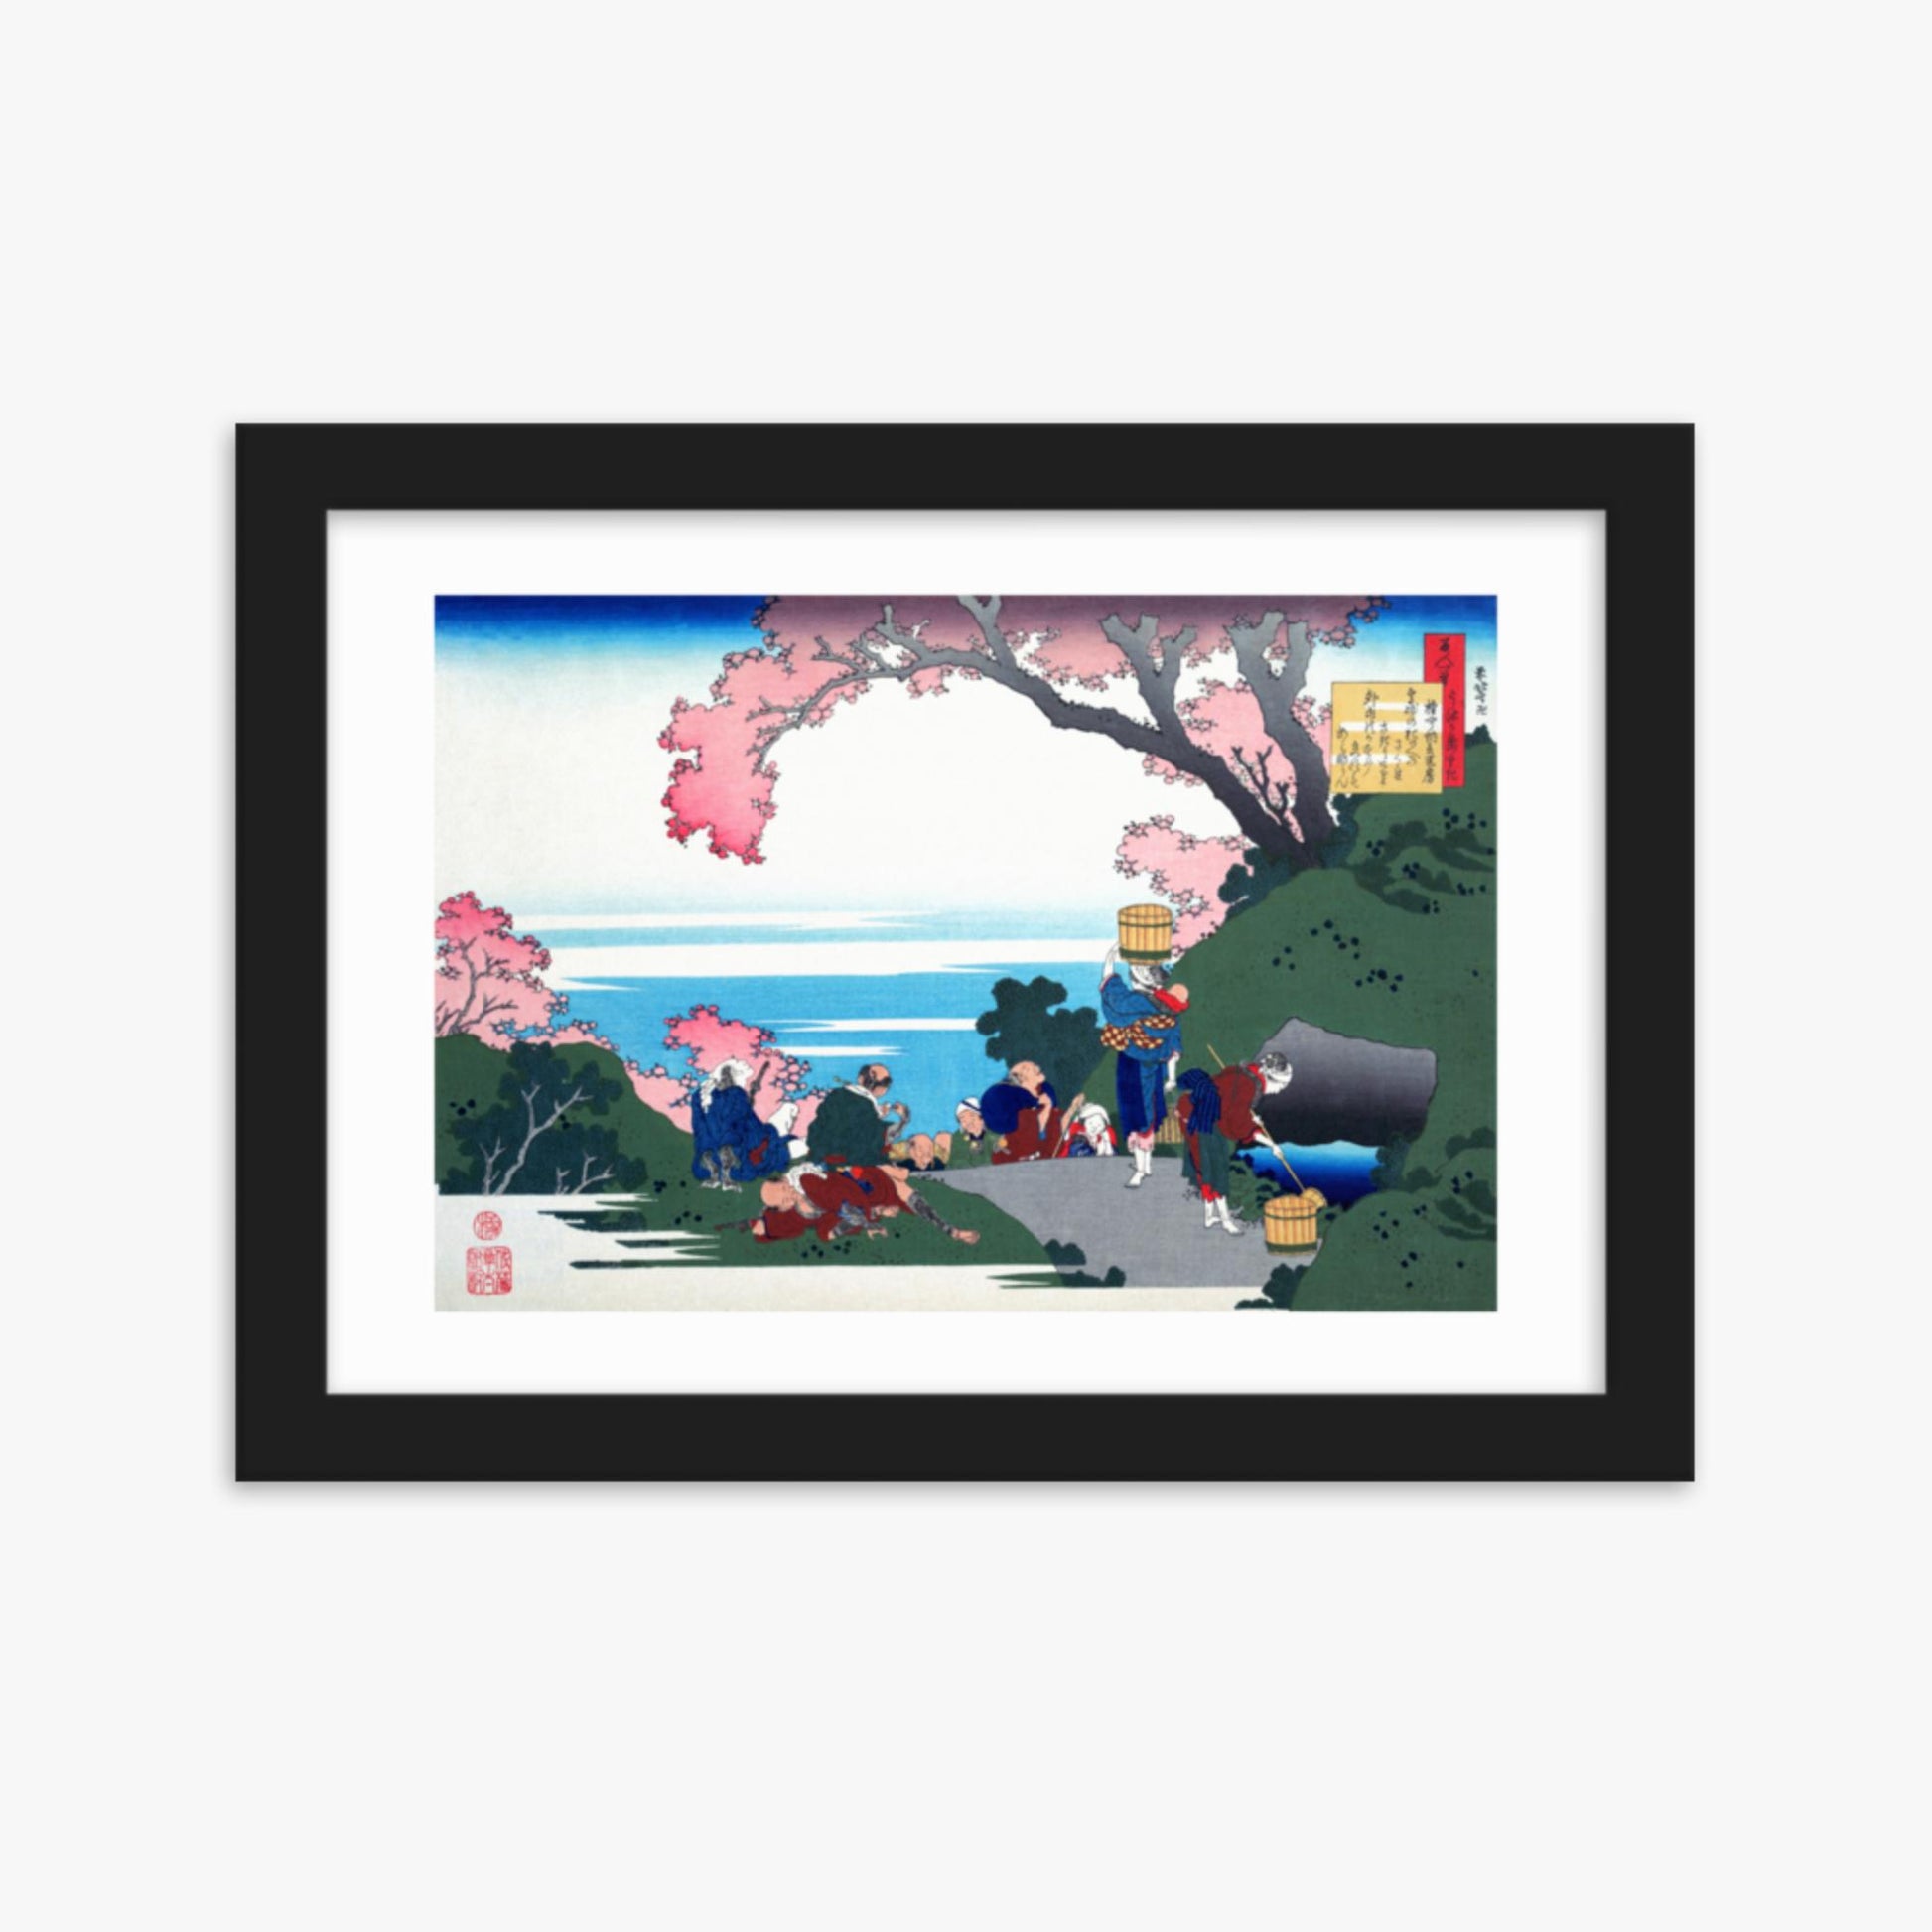 Katsushika Hokusai - Poem by Gon-chûnagon Masafusa 21x30 cm Poster With Black Frame